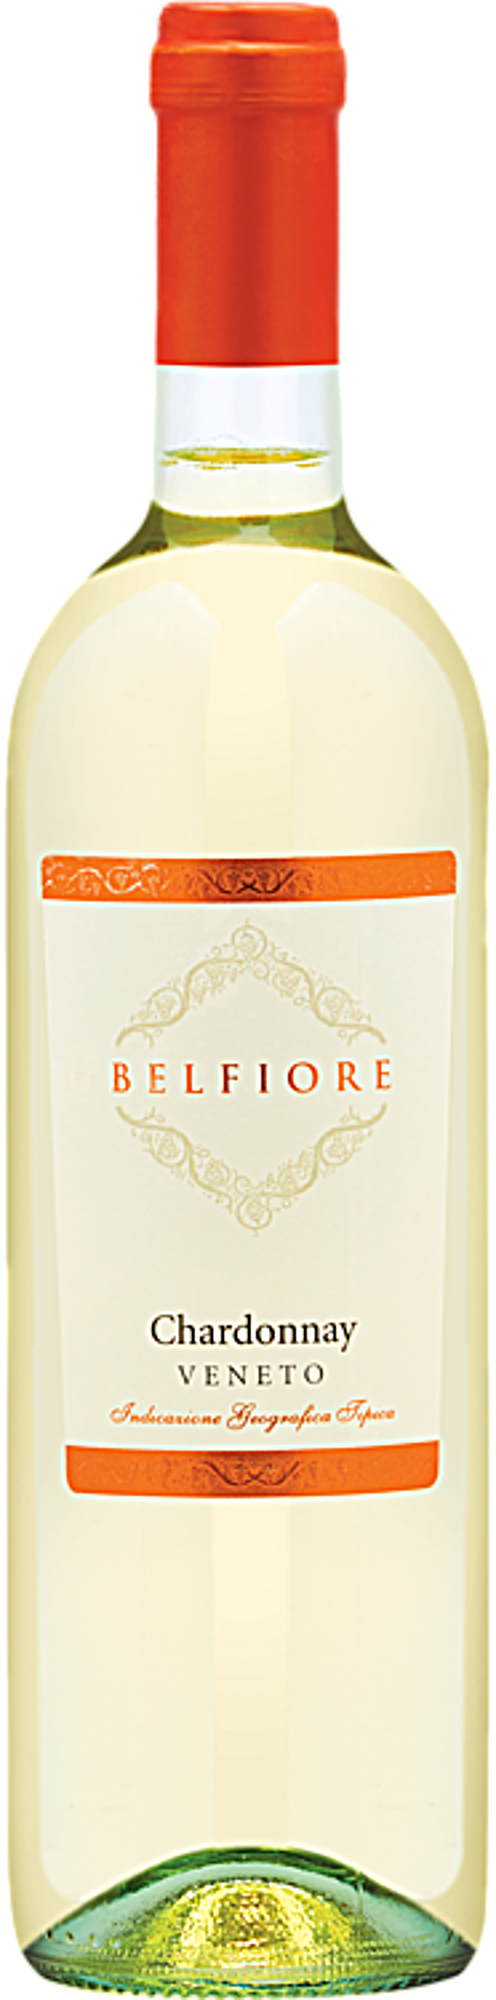 2020 Belfiore Chardonnay Veneto I.G.T.